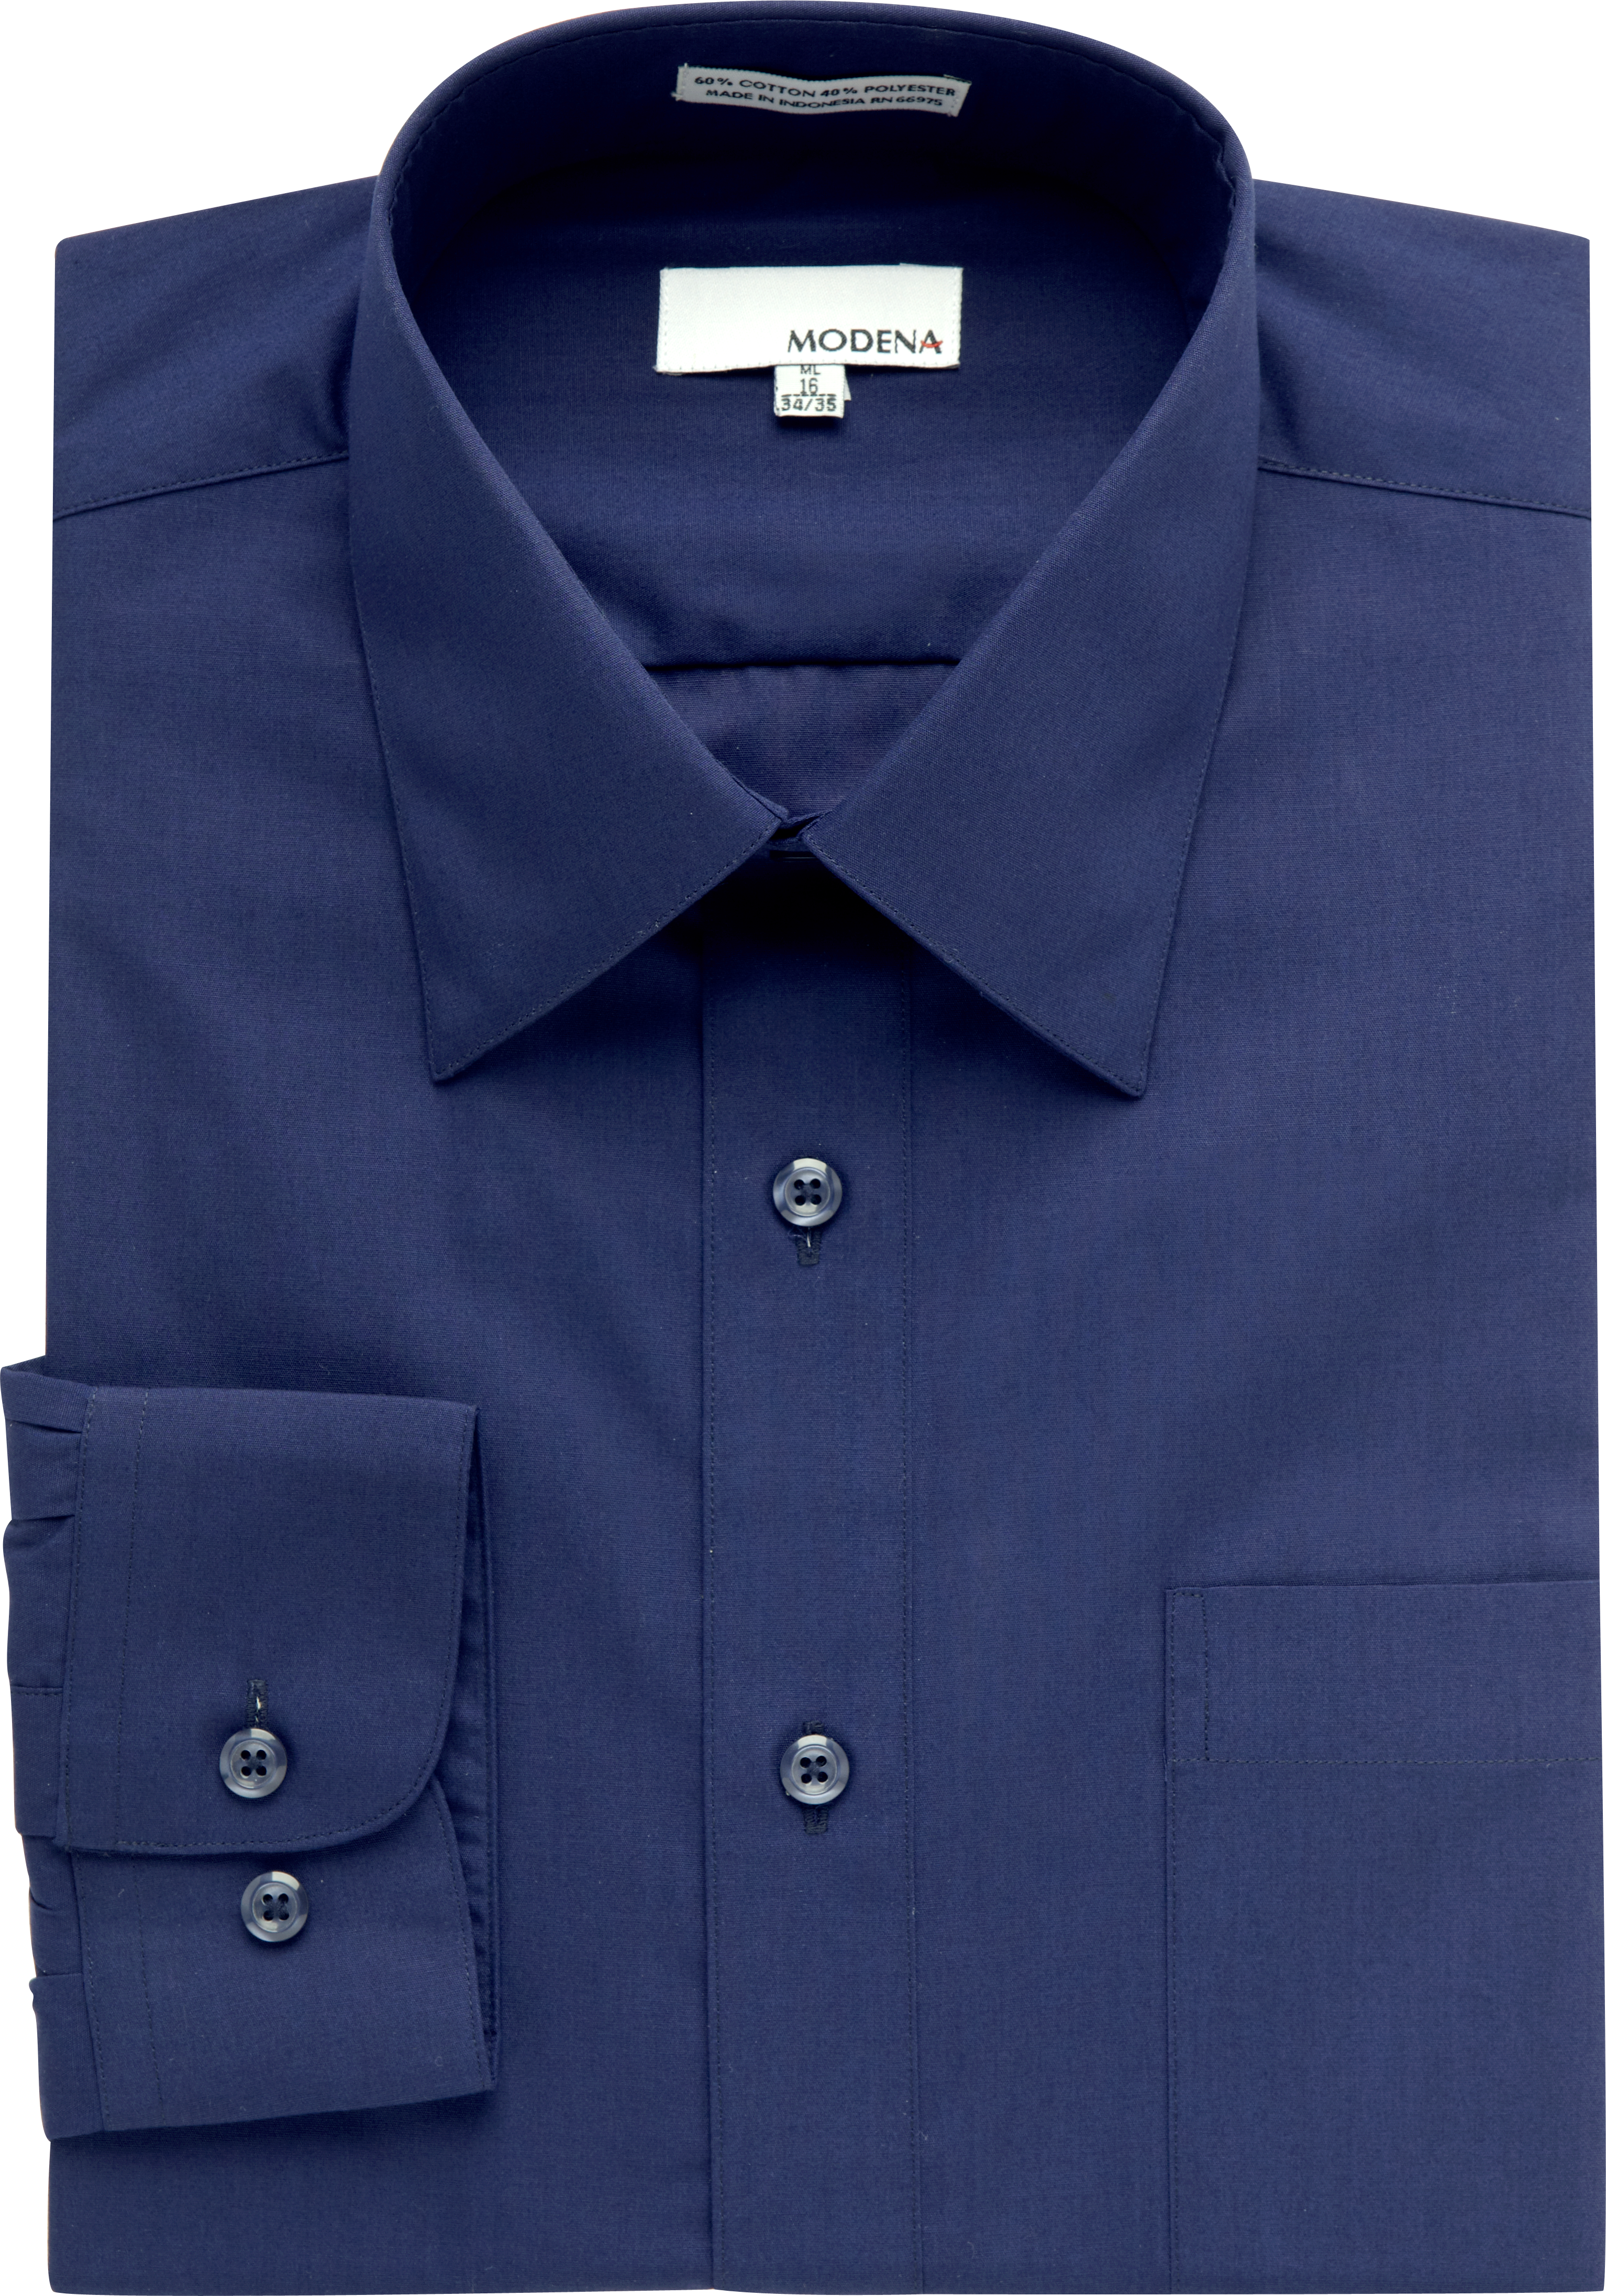 Shirts Modena Royal Blue Long Sleeve Dress Shirt Big roegh.nl